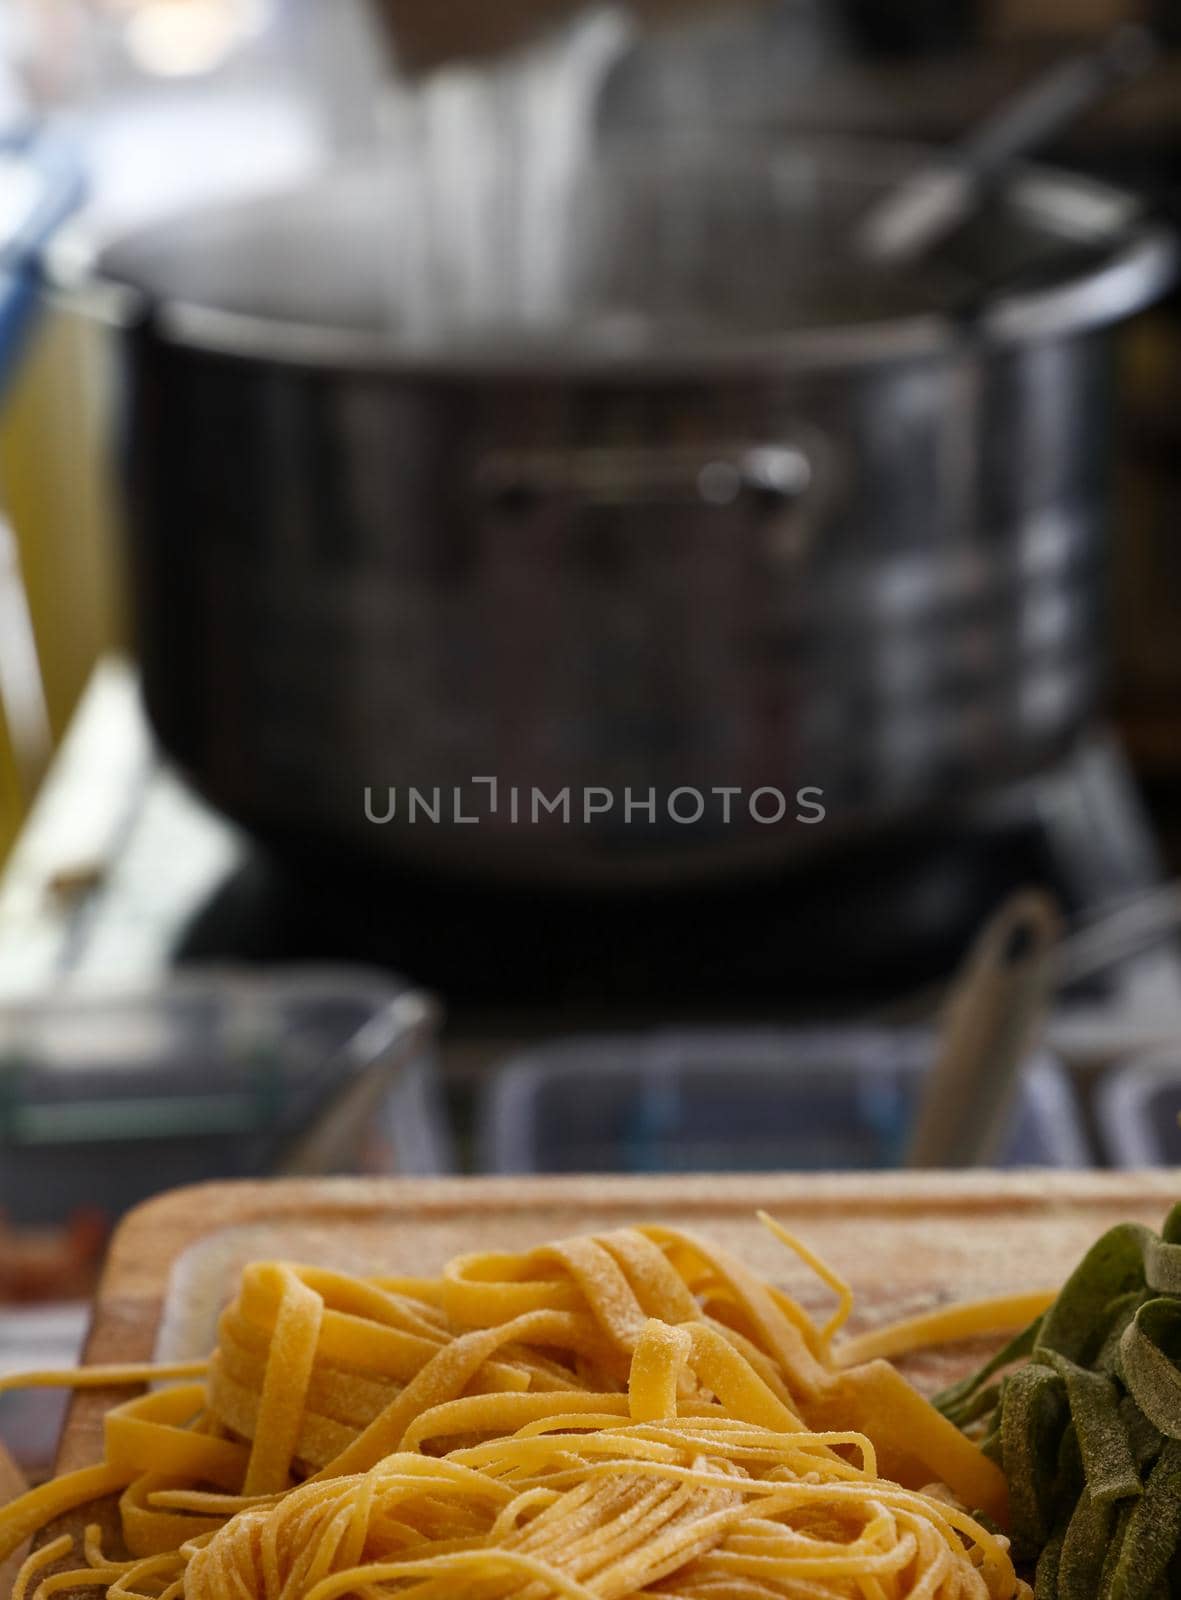 Cooking traditional Italian tagliatelle pasta by BreakingTheWalls